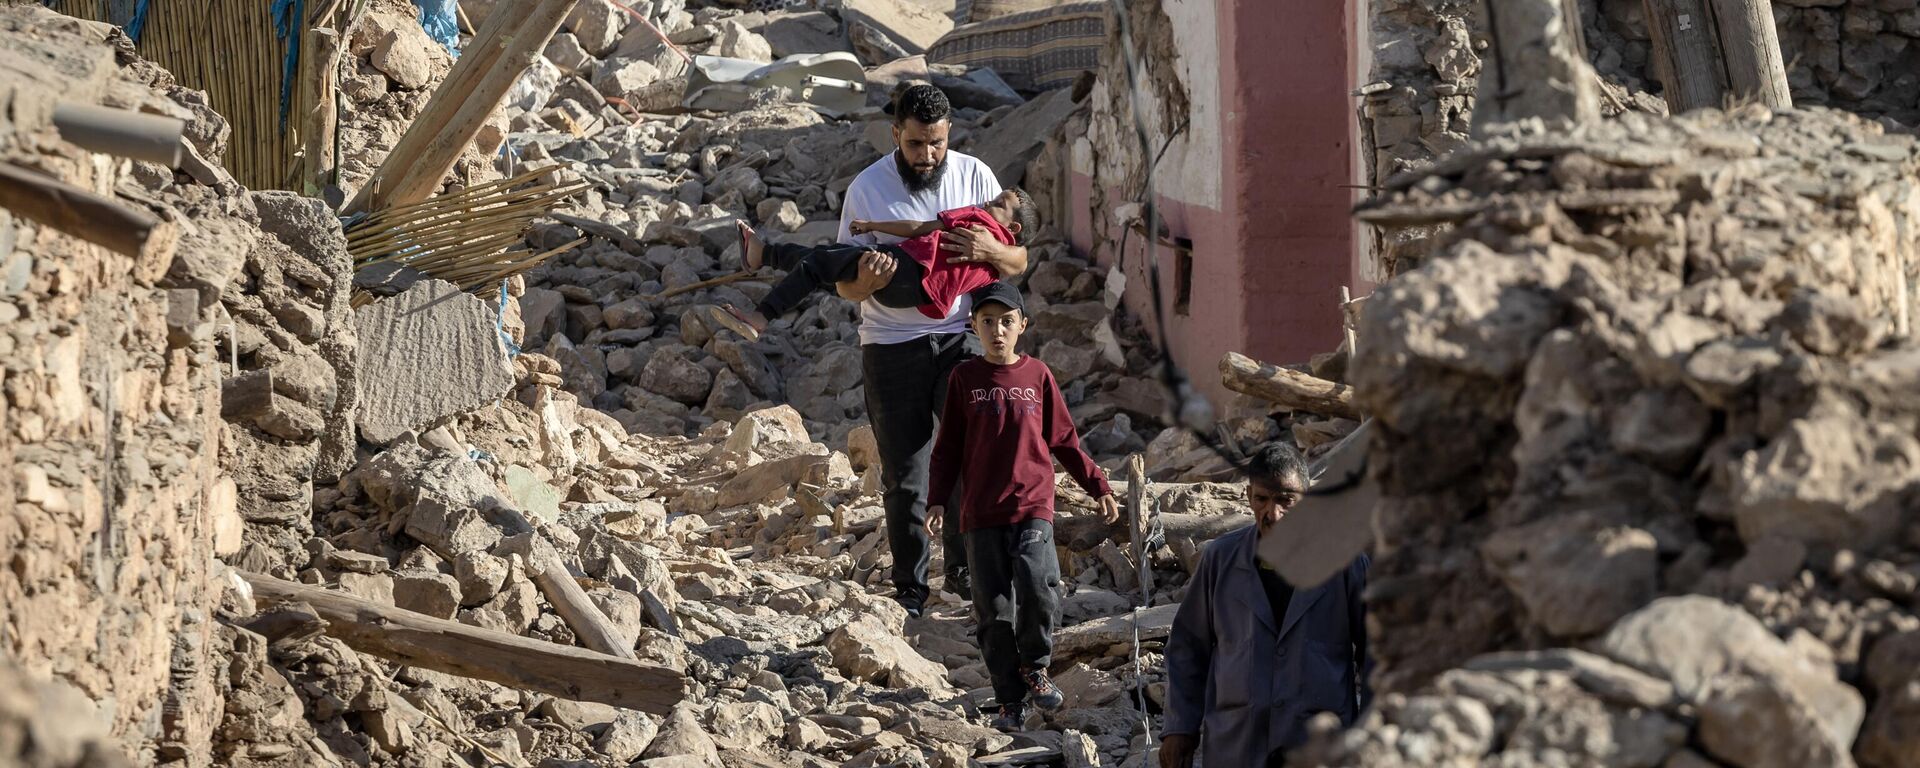 Pessoas passam por casas destruídas após terremoto no vilarejo montanhoso de Tafeghaghte, Marrocos, 9 de setembro de 2023 - Sputnik Brasil, 1920, 09.09.2023